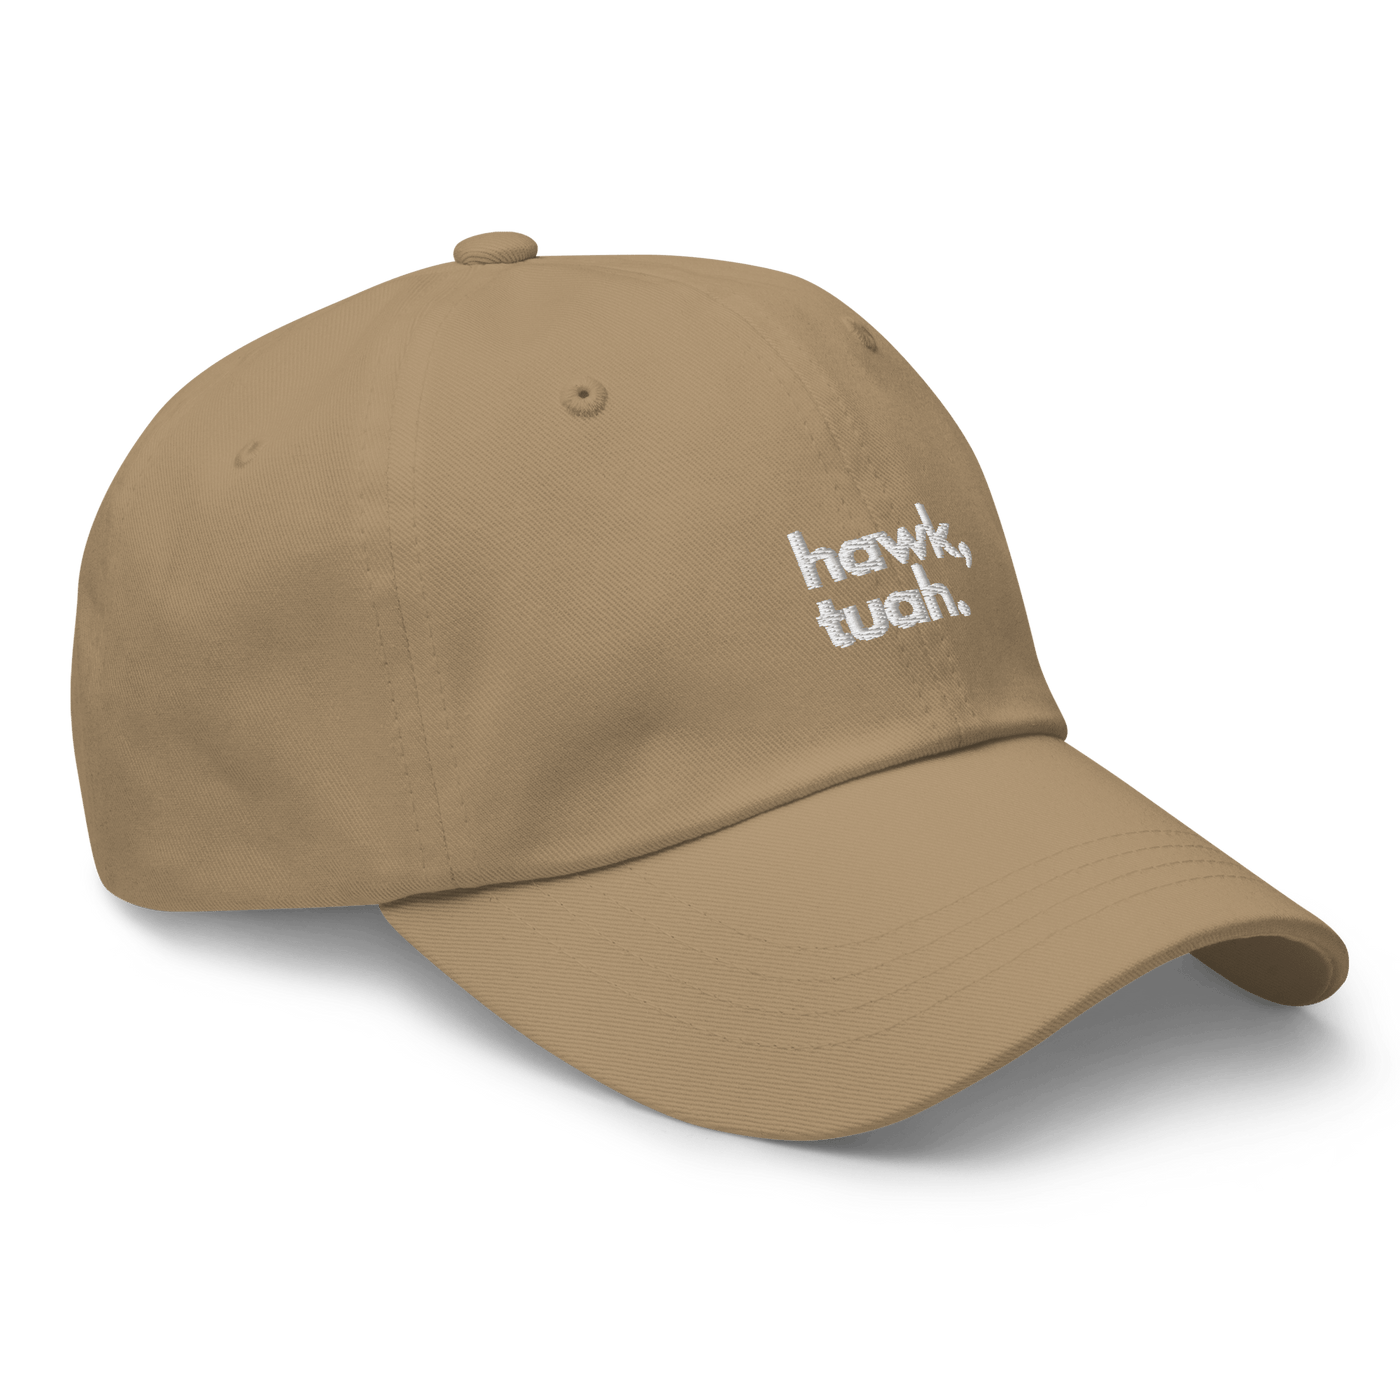 Hawk Tuah Dad hat - Khaki - Just Another Cap Store